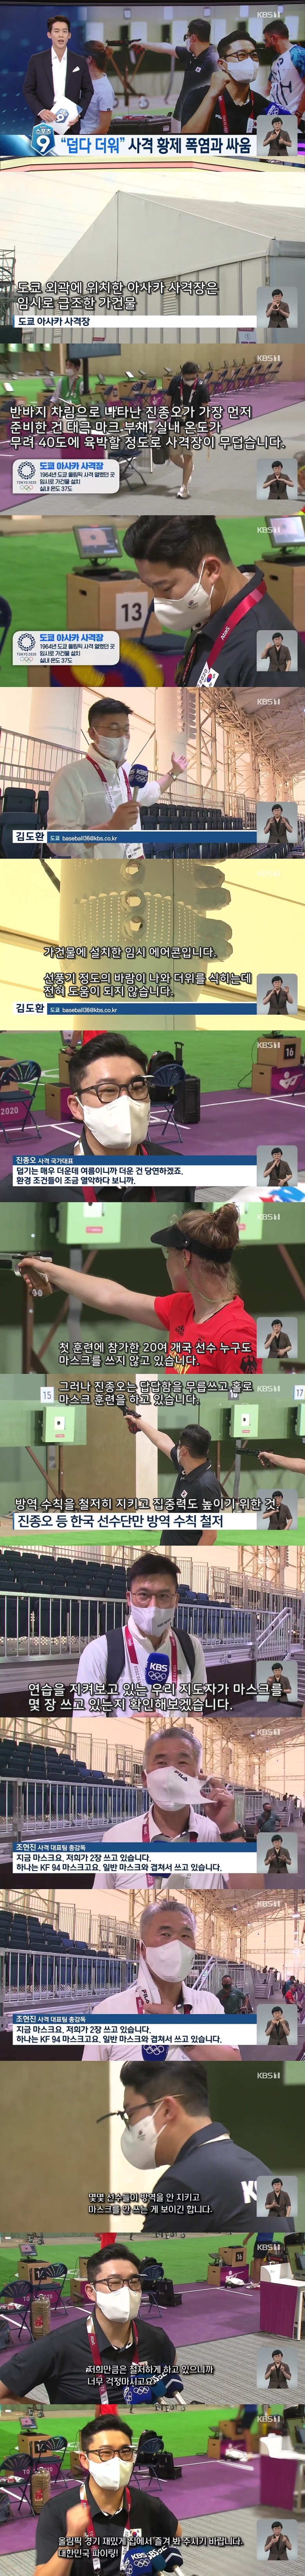 Shooting range status for the Japanese Olympic Games.jpg (feat. Jin Jong O)